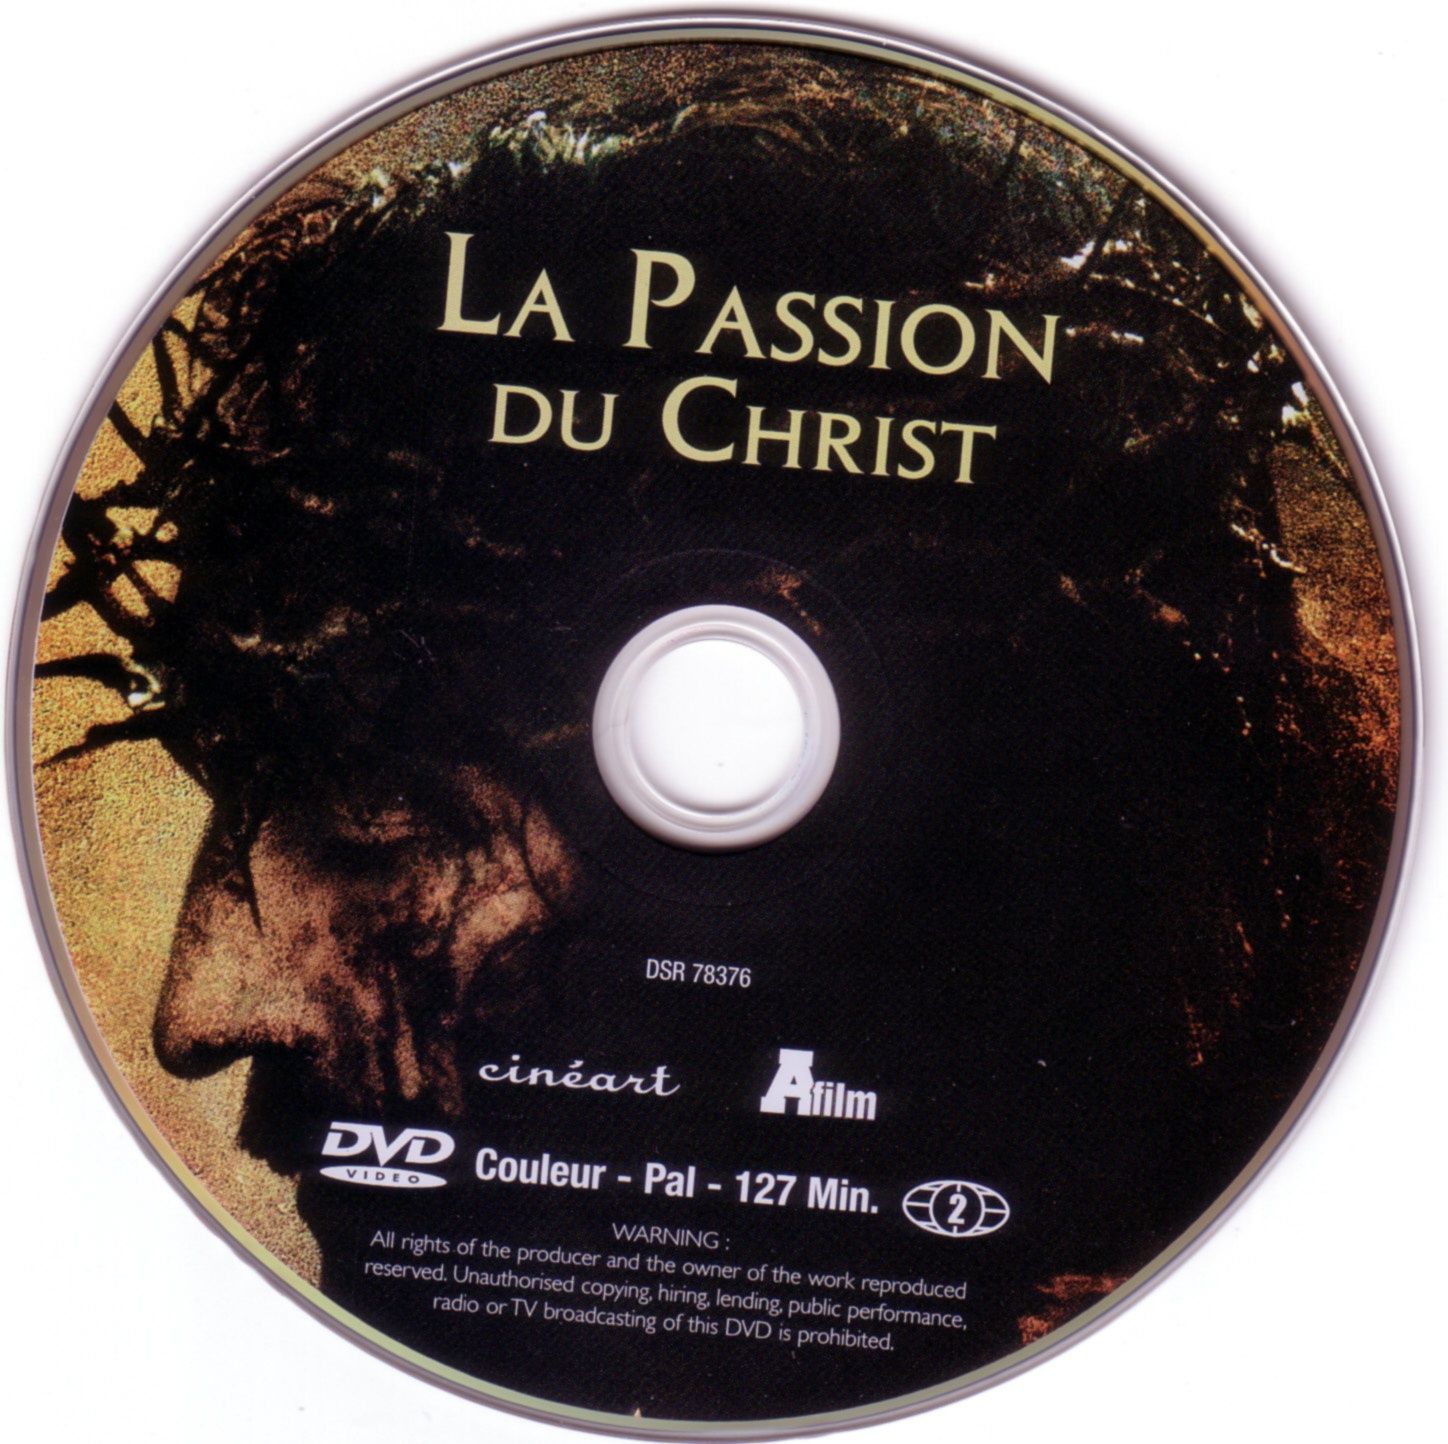 La passion du Christ v2